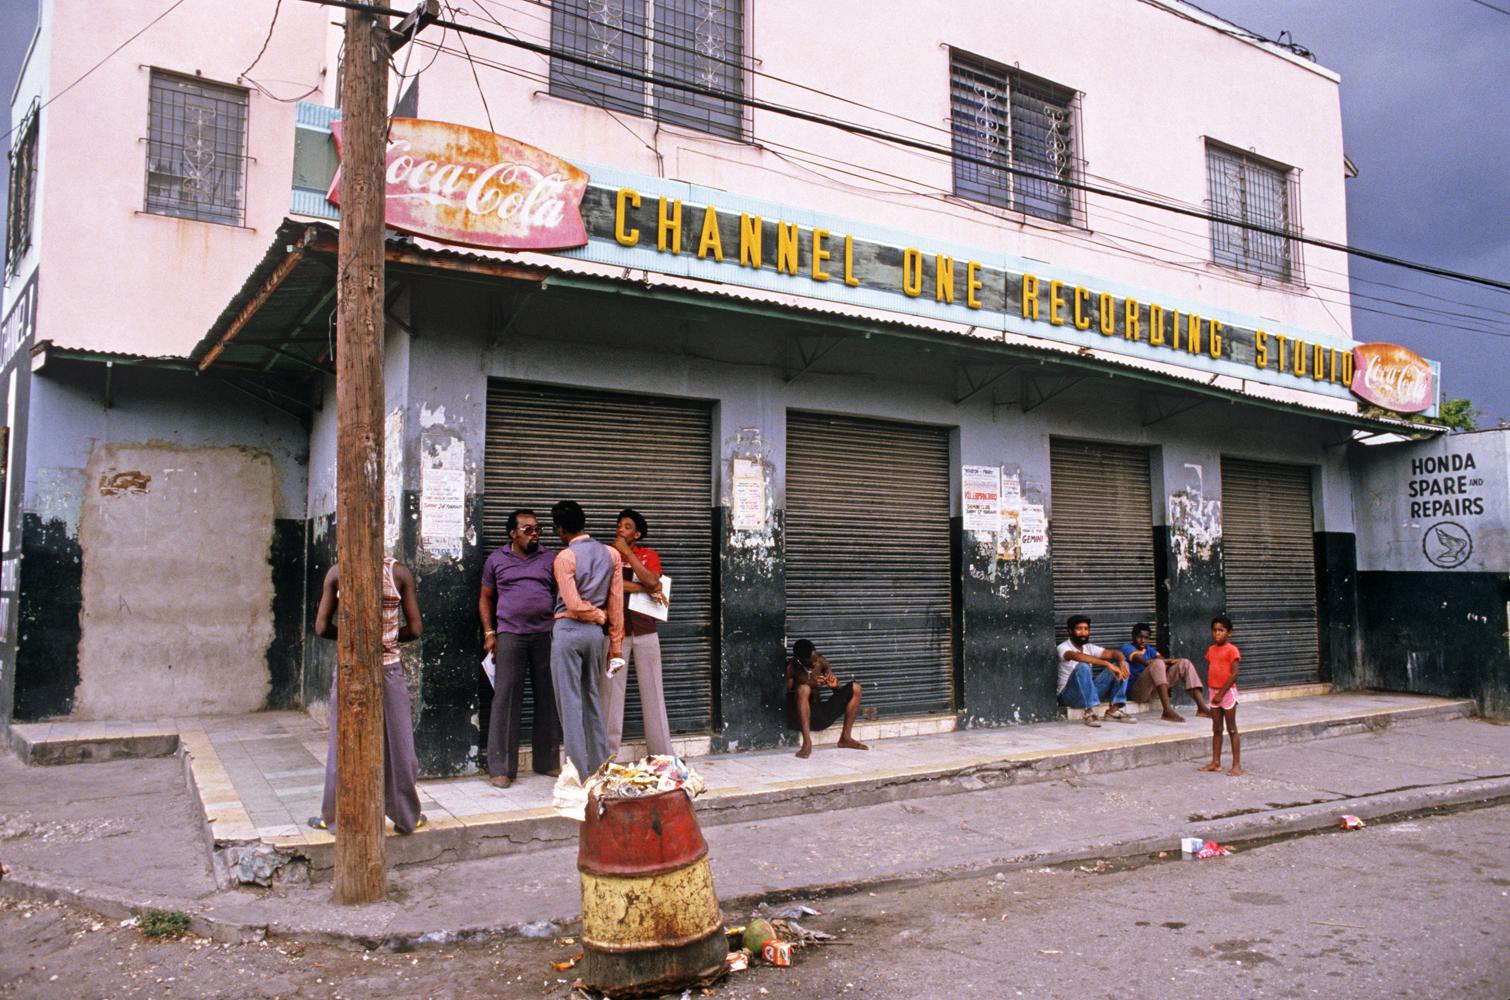 Alain Le Garsmeur Figurative Photograph - 'Channel One Recording Studio Jamaica'  Oversize Limited Edition C type 